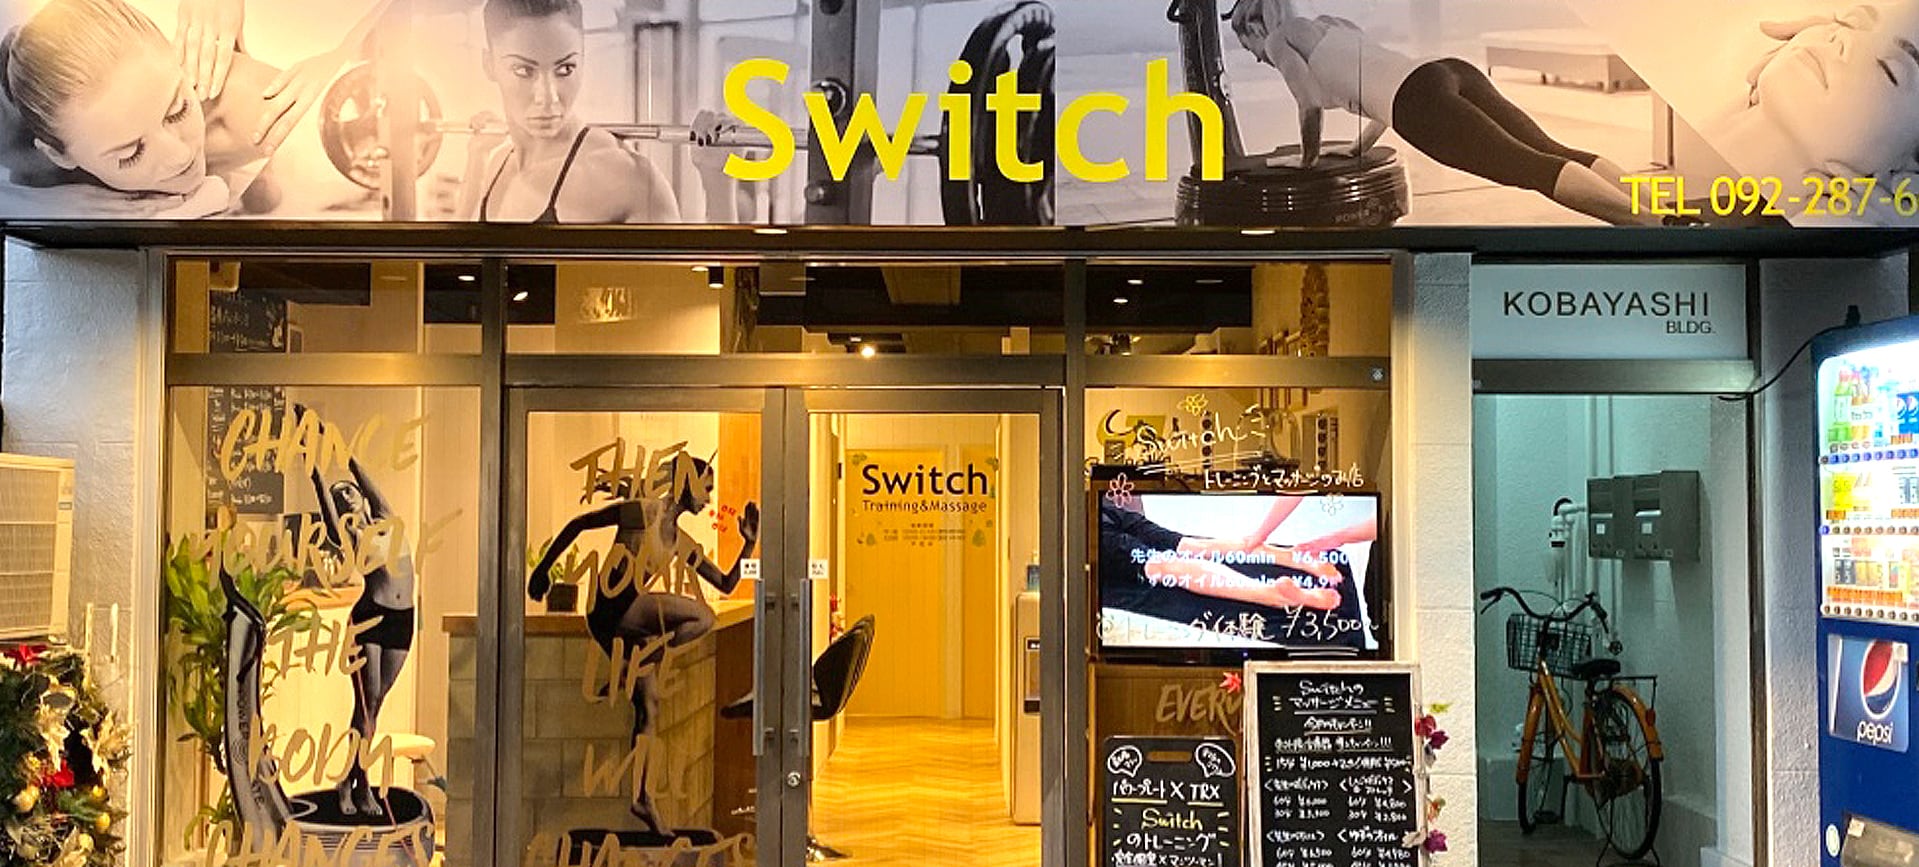 Switchの外観写真